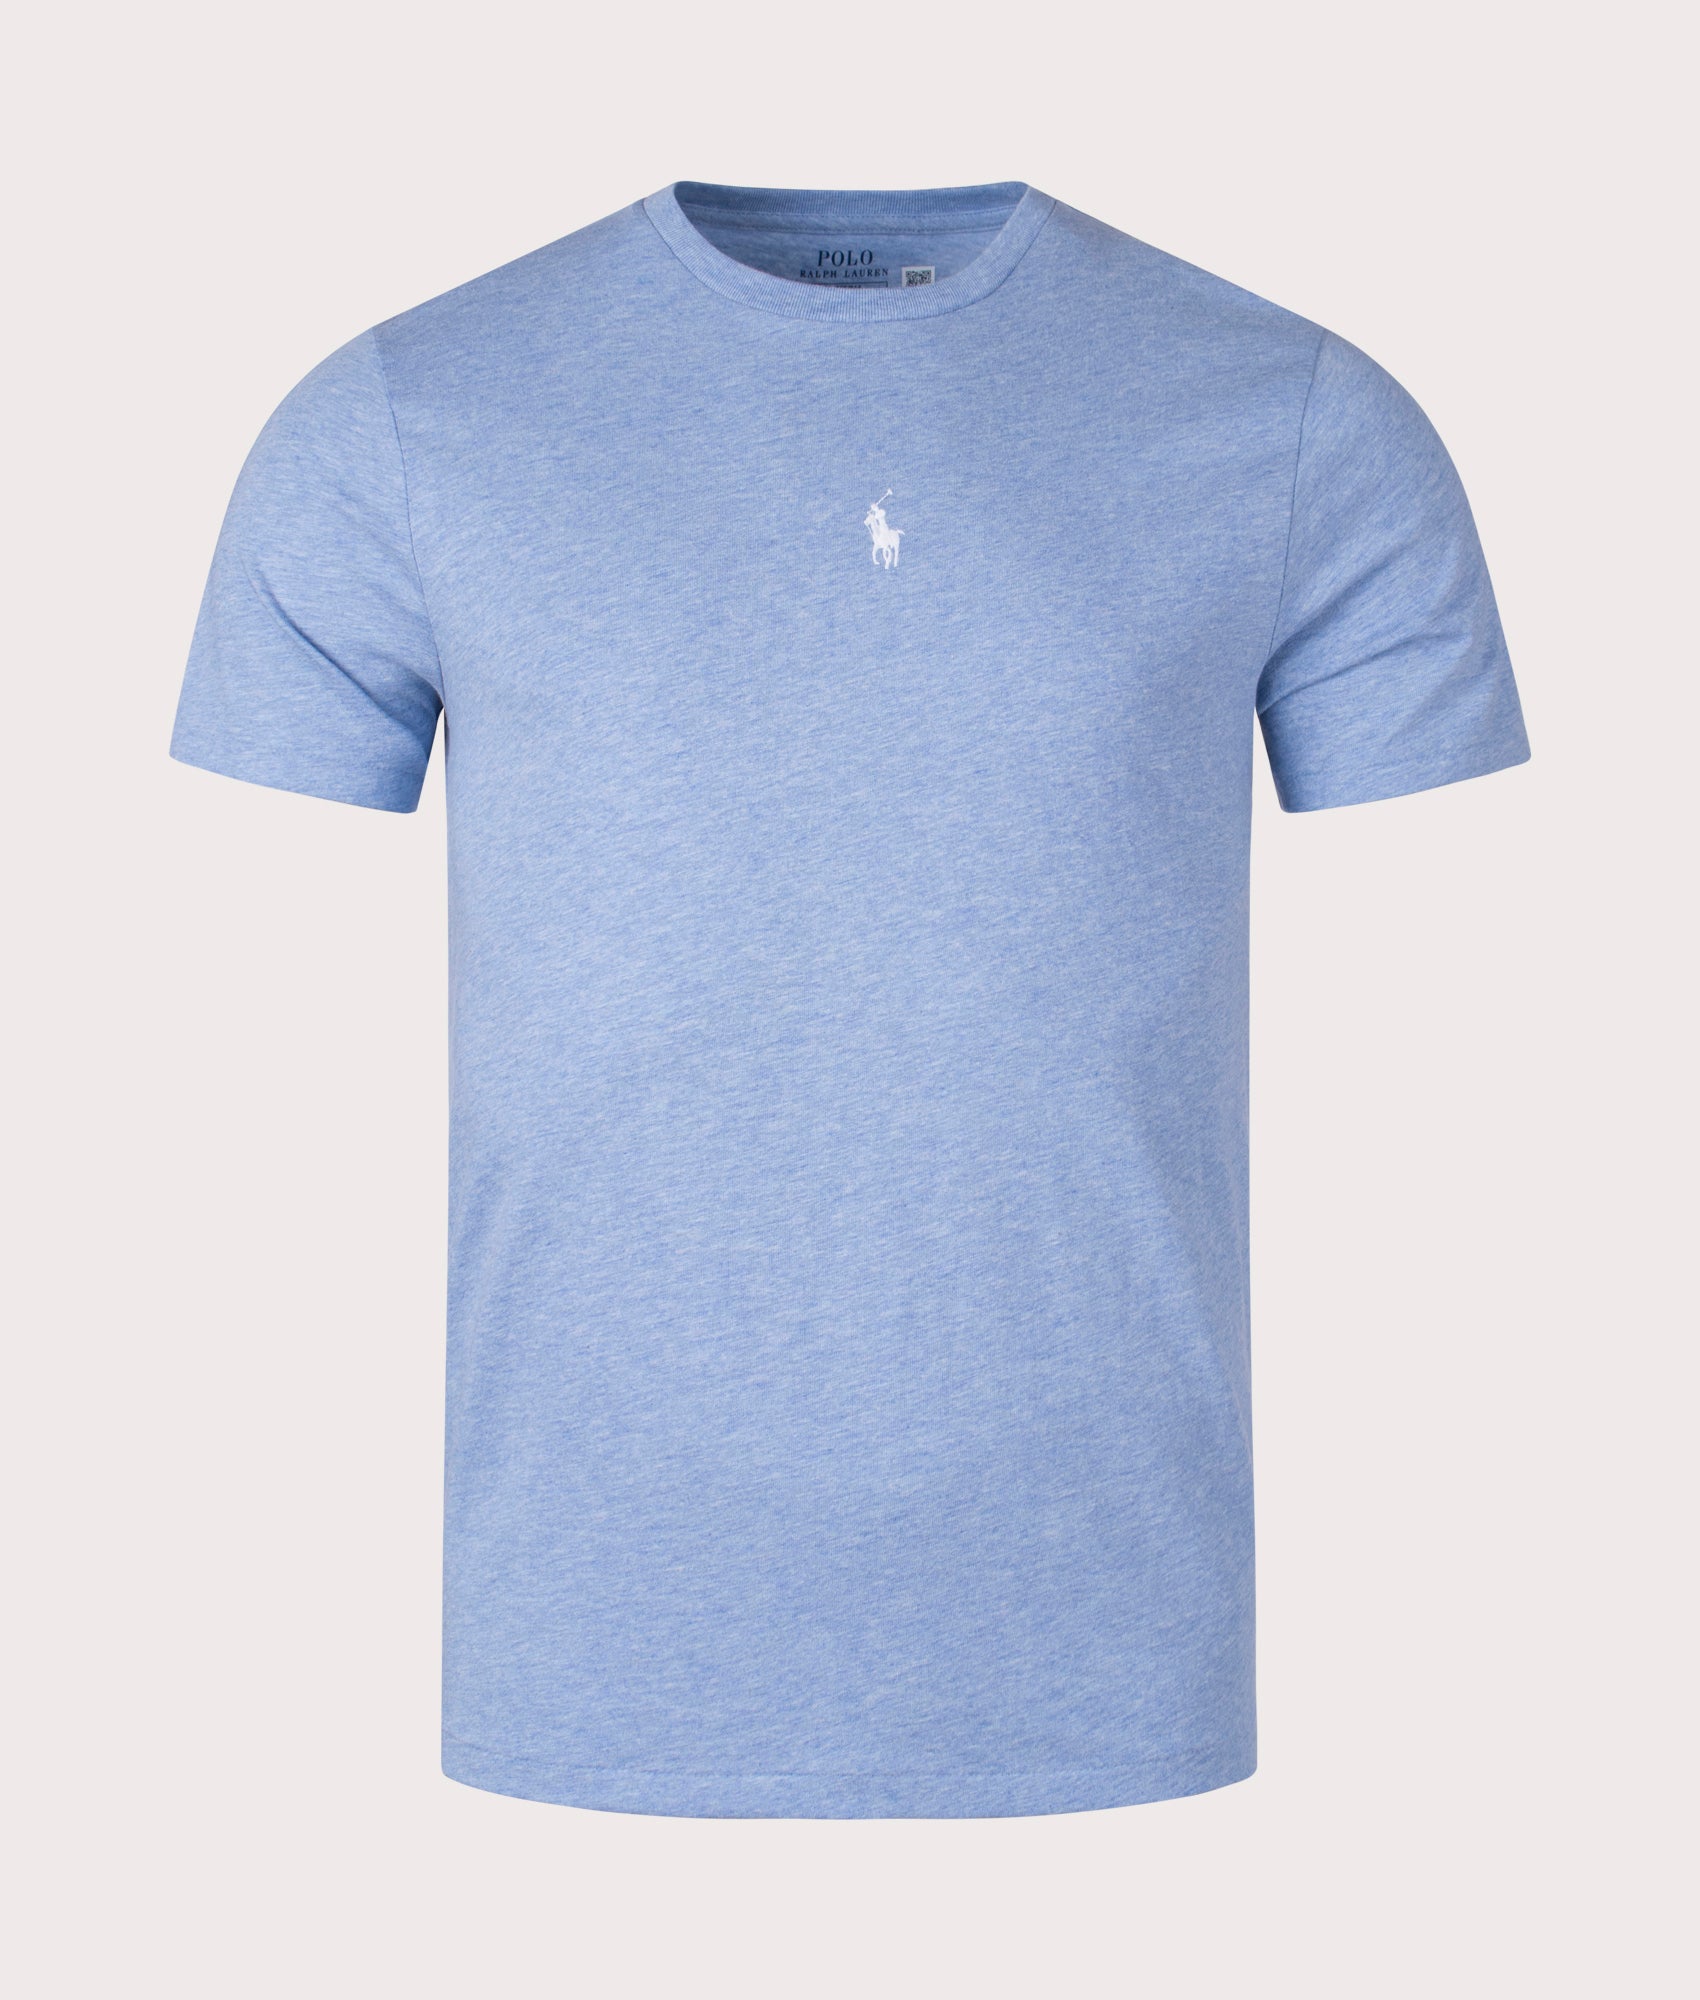 Polo Ralph Lauren Mens Custom Slim Fit Jersey T-Shirt - Colour: 043 Isle Heather - Size: Small